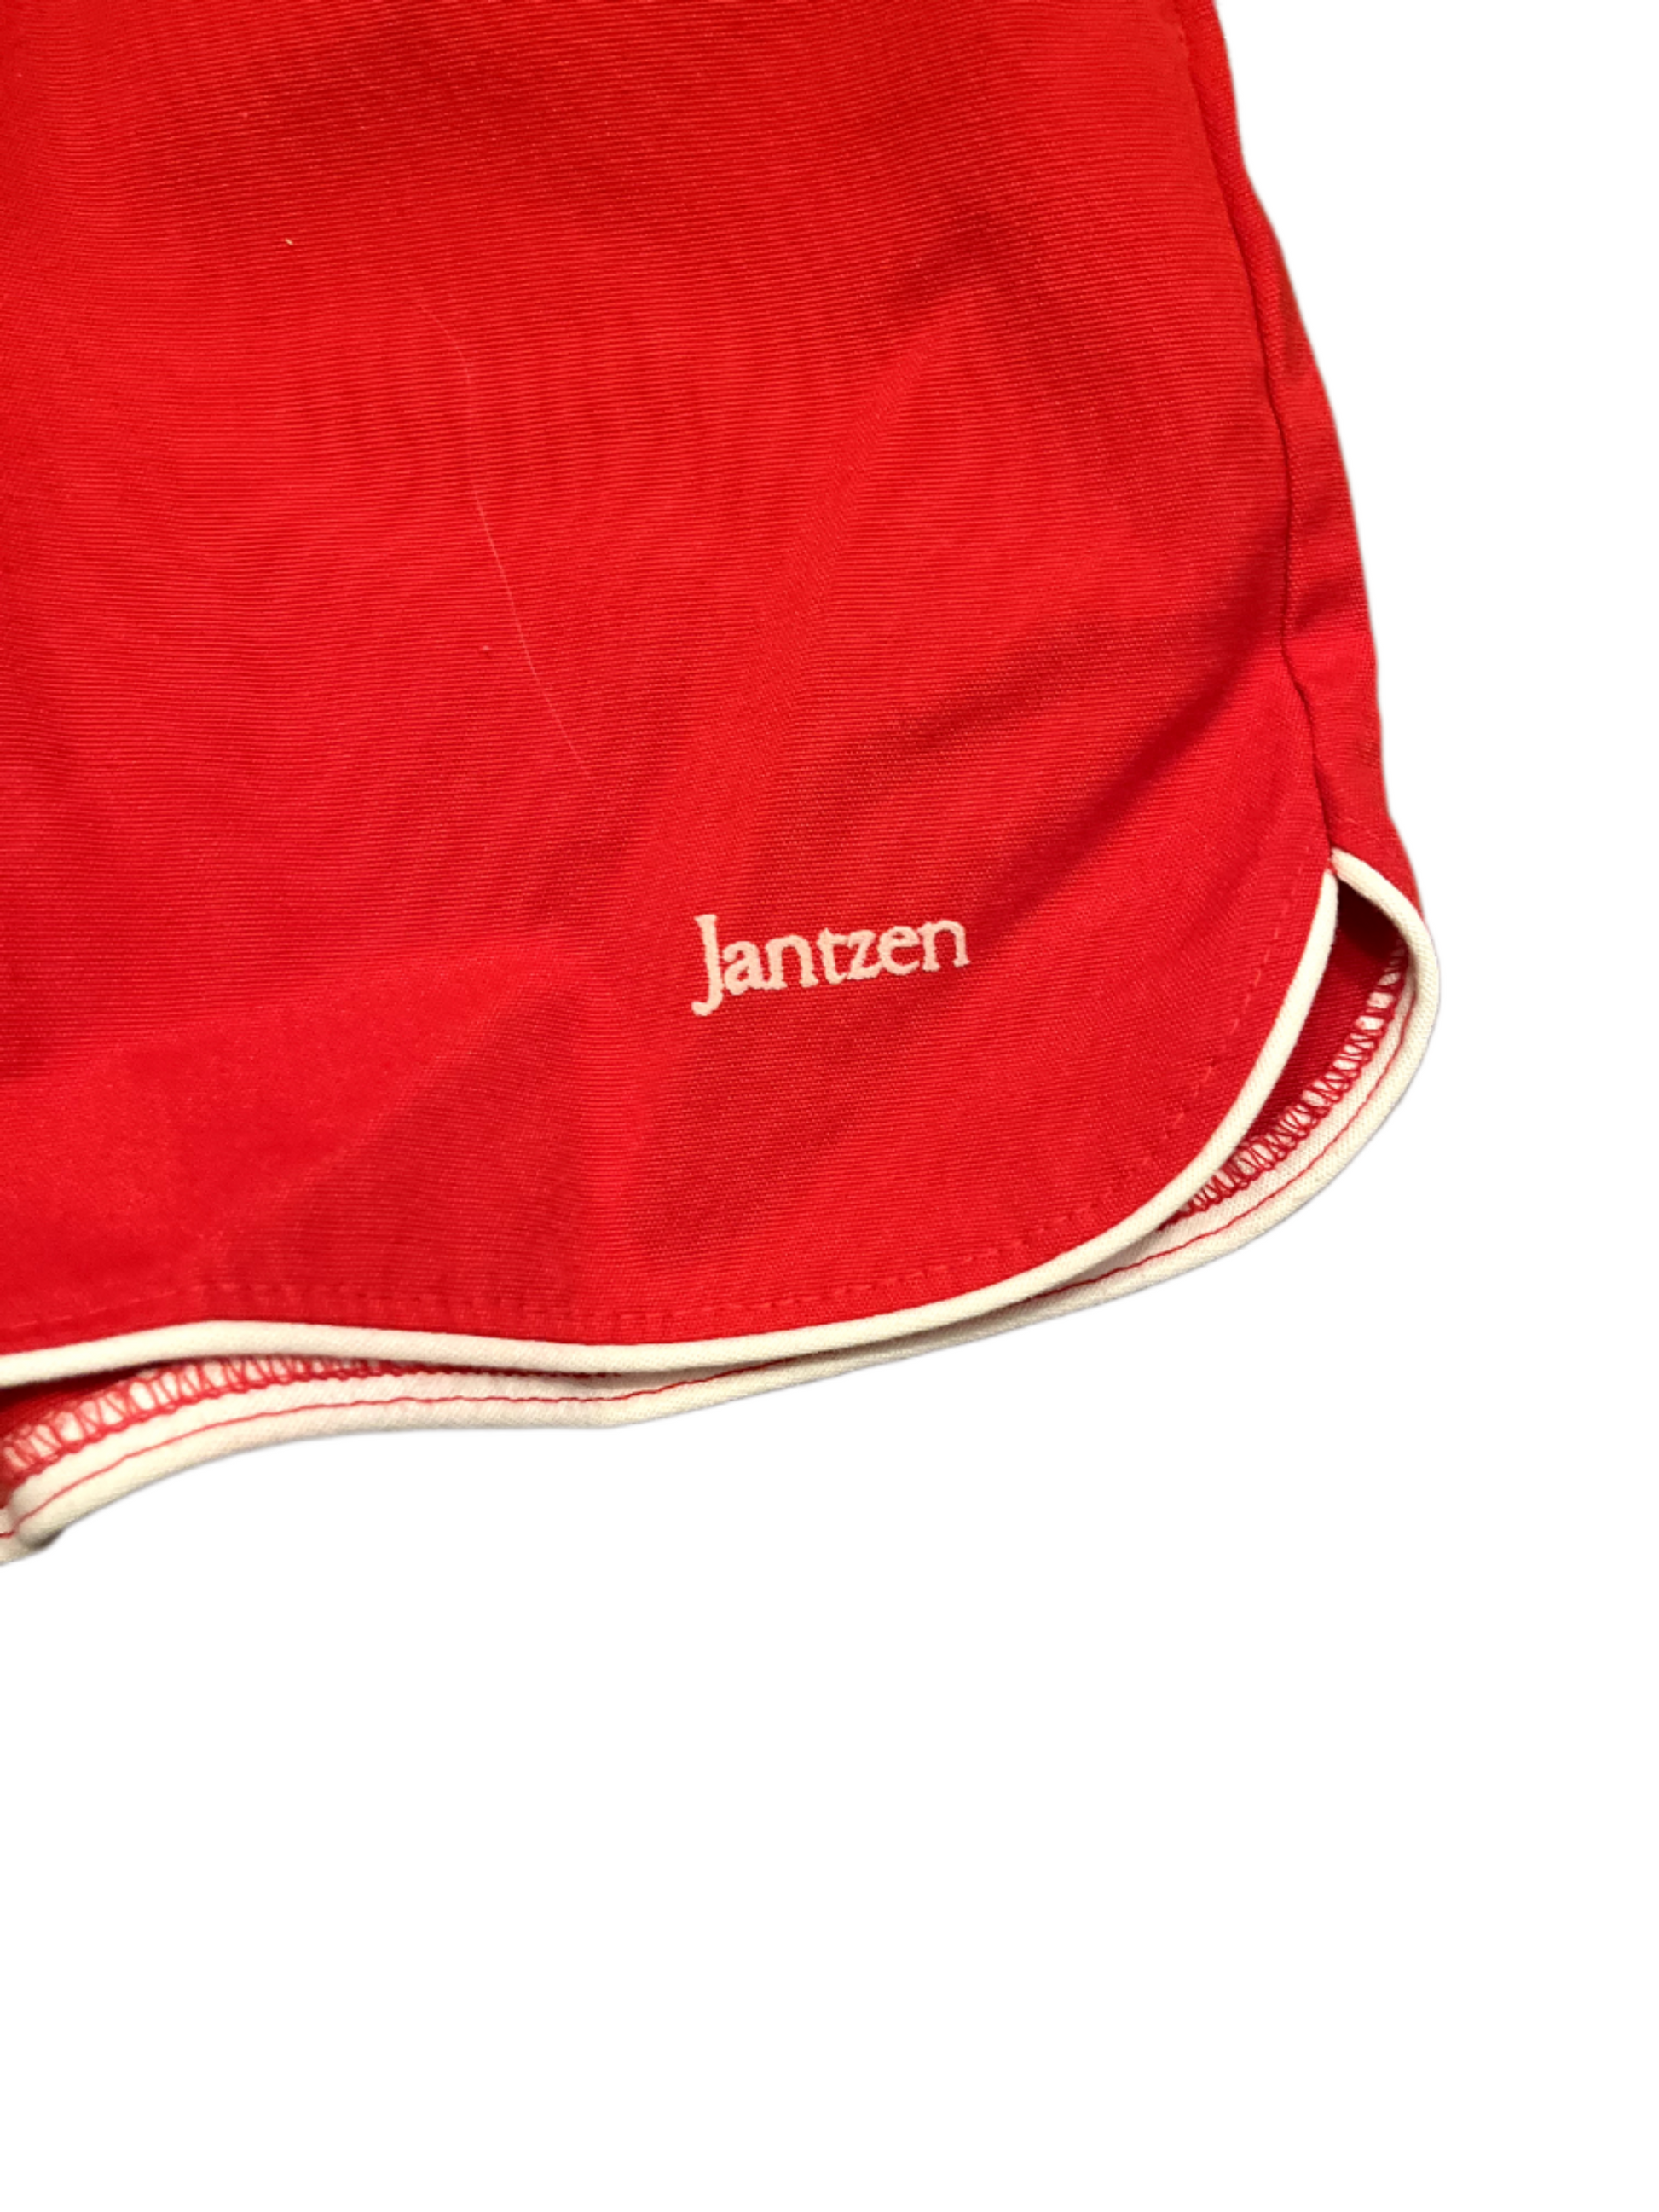 Jantzen logo on front of vintage red shorts with white stripe on white background.